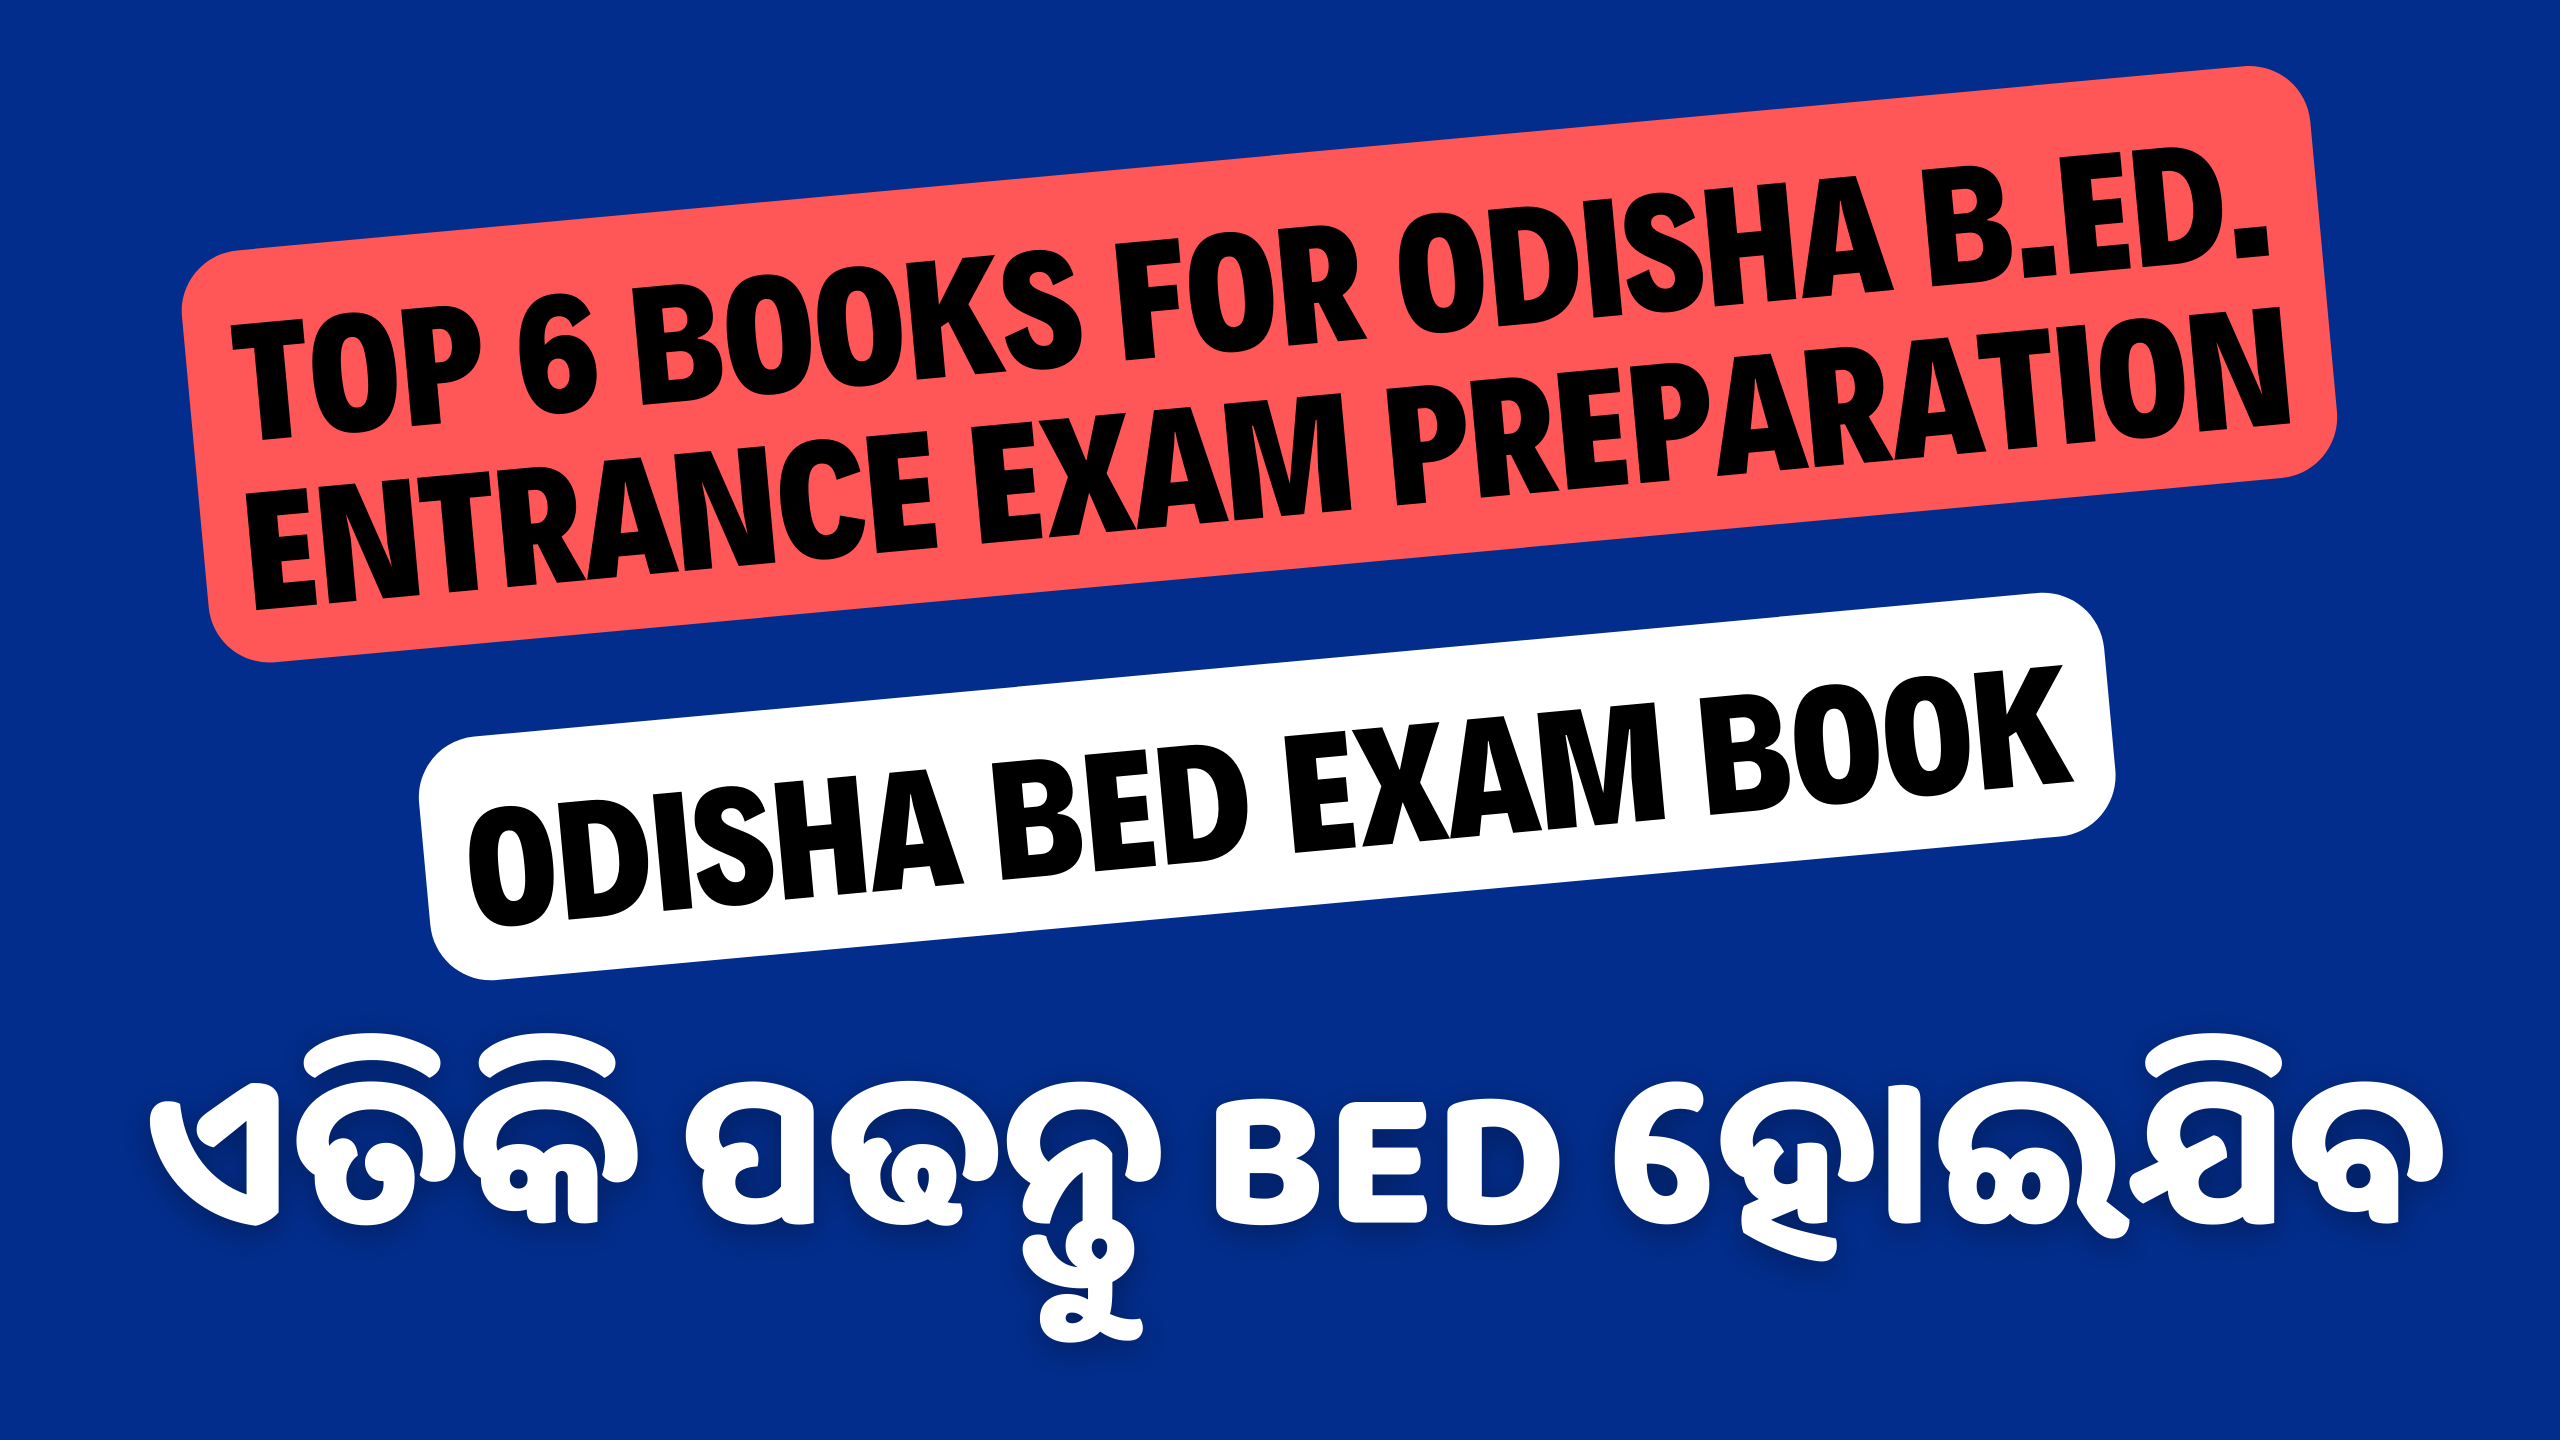 Books for Odisha B.Ed. Entrance Exam